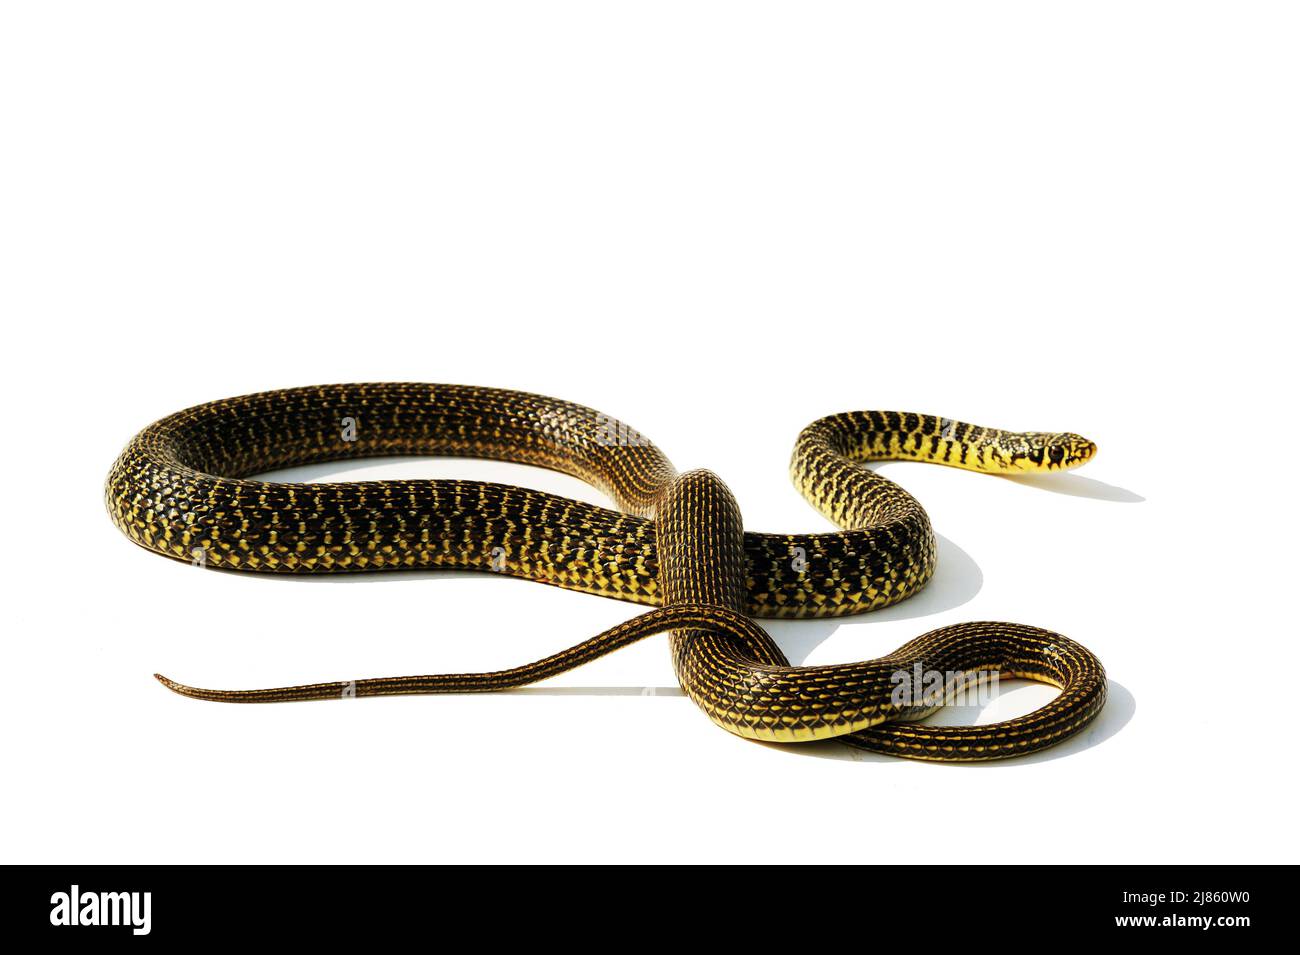 Verde látigo serpiente en estudio ; Nativo de Poitou Francia Foto de stock